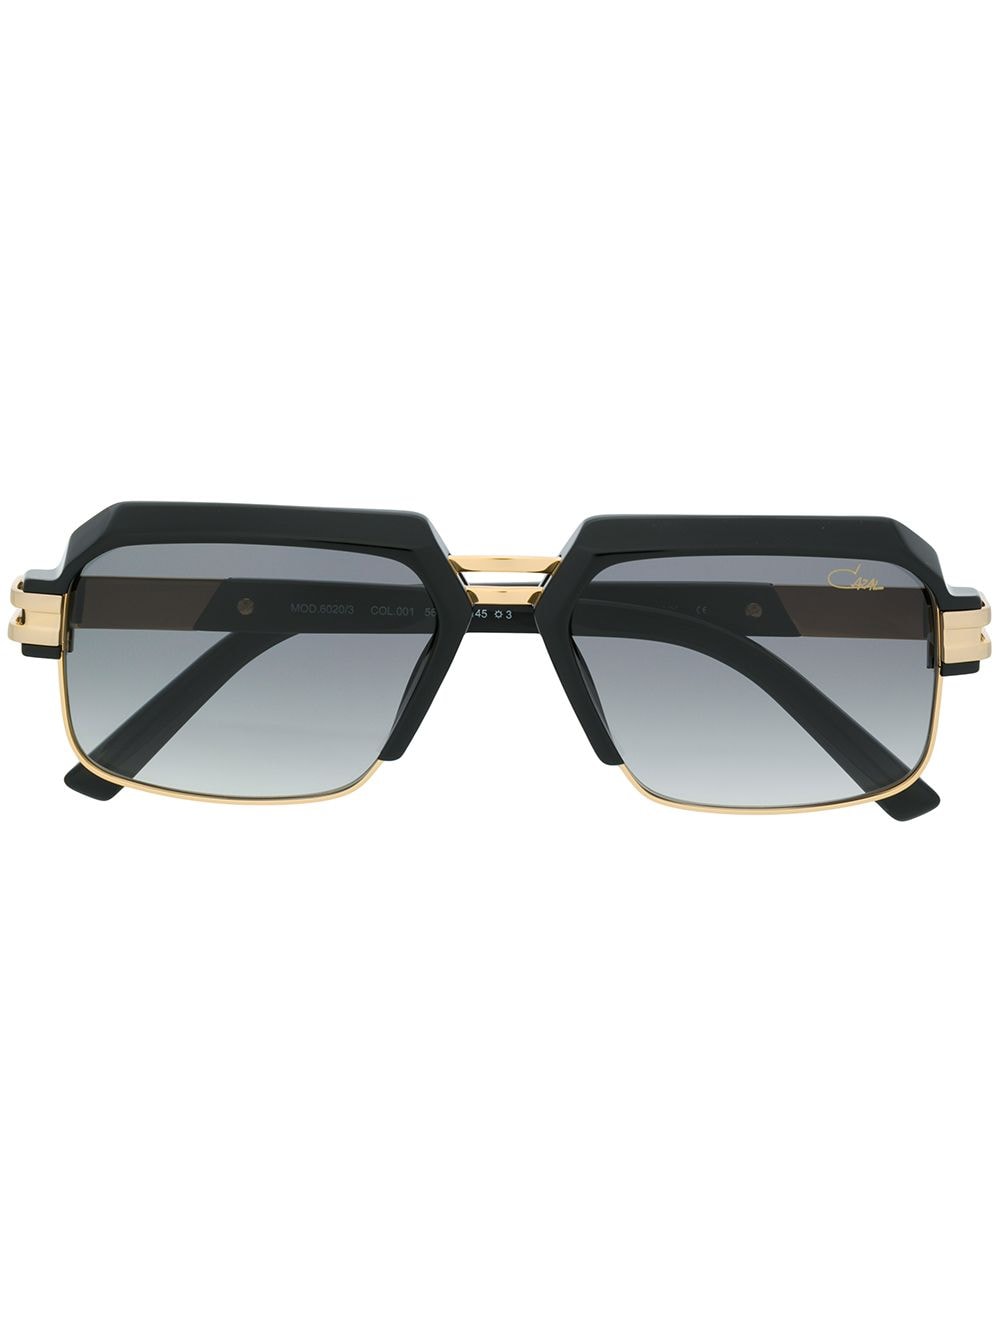 Image 1 of Cazal square sunglasses